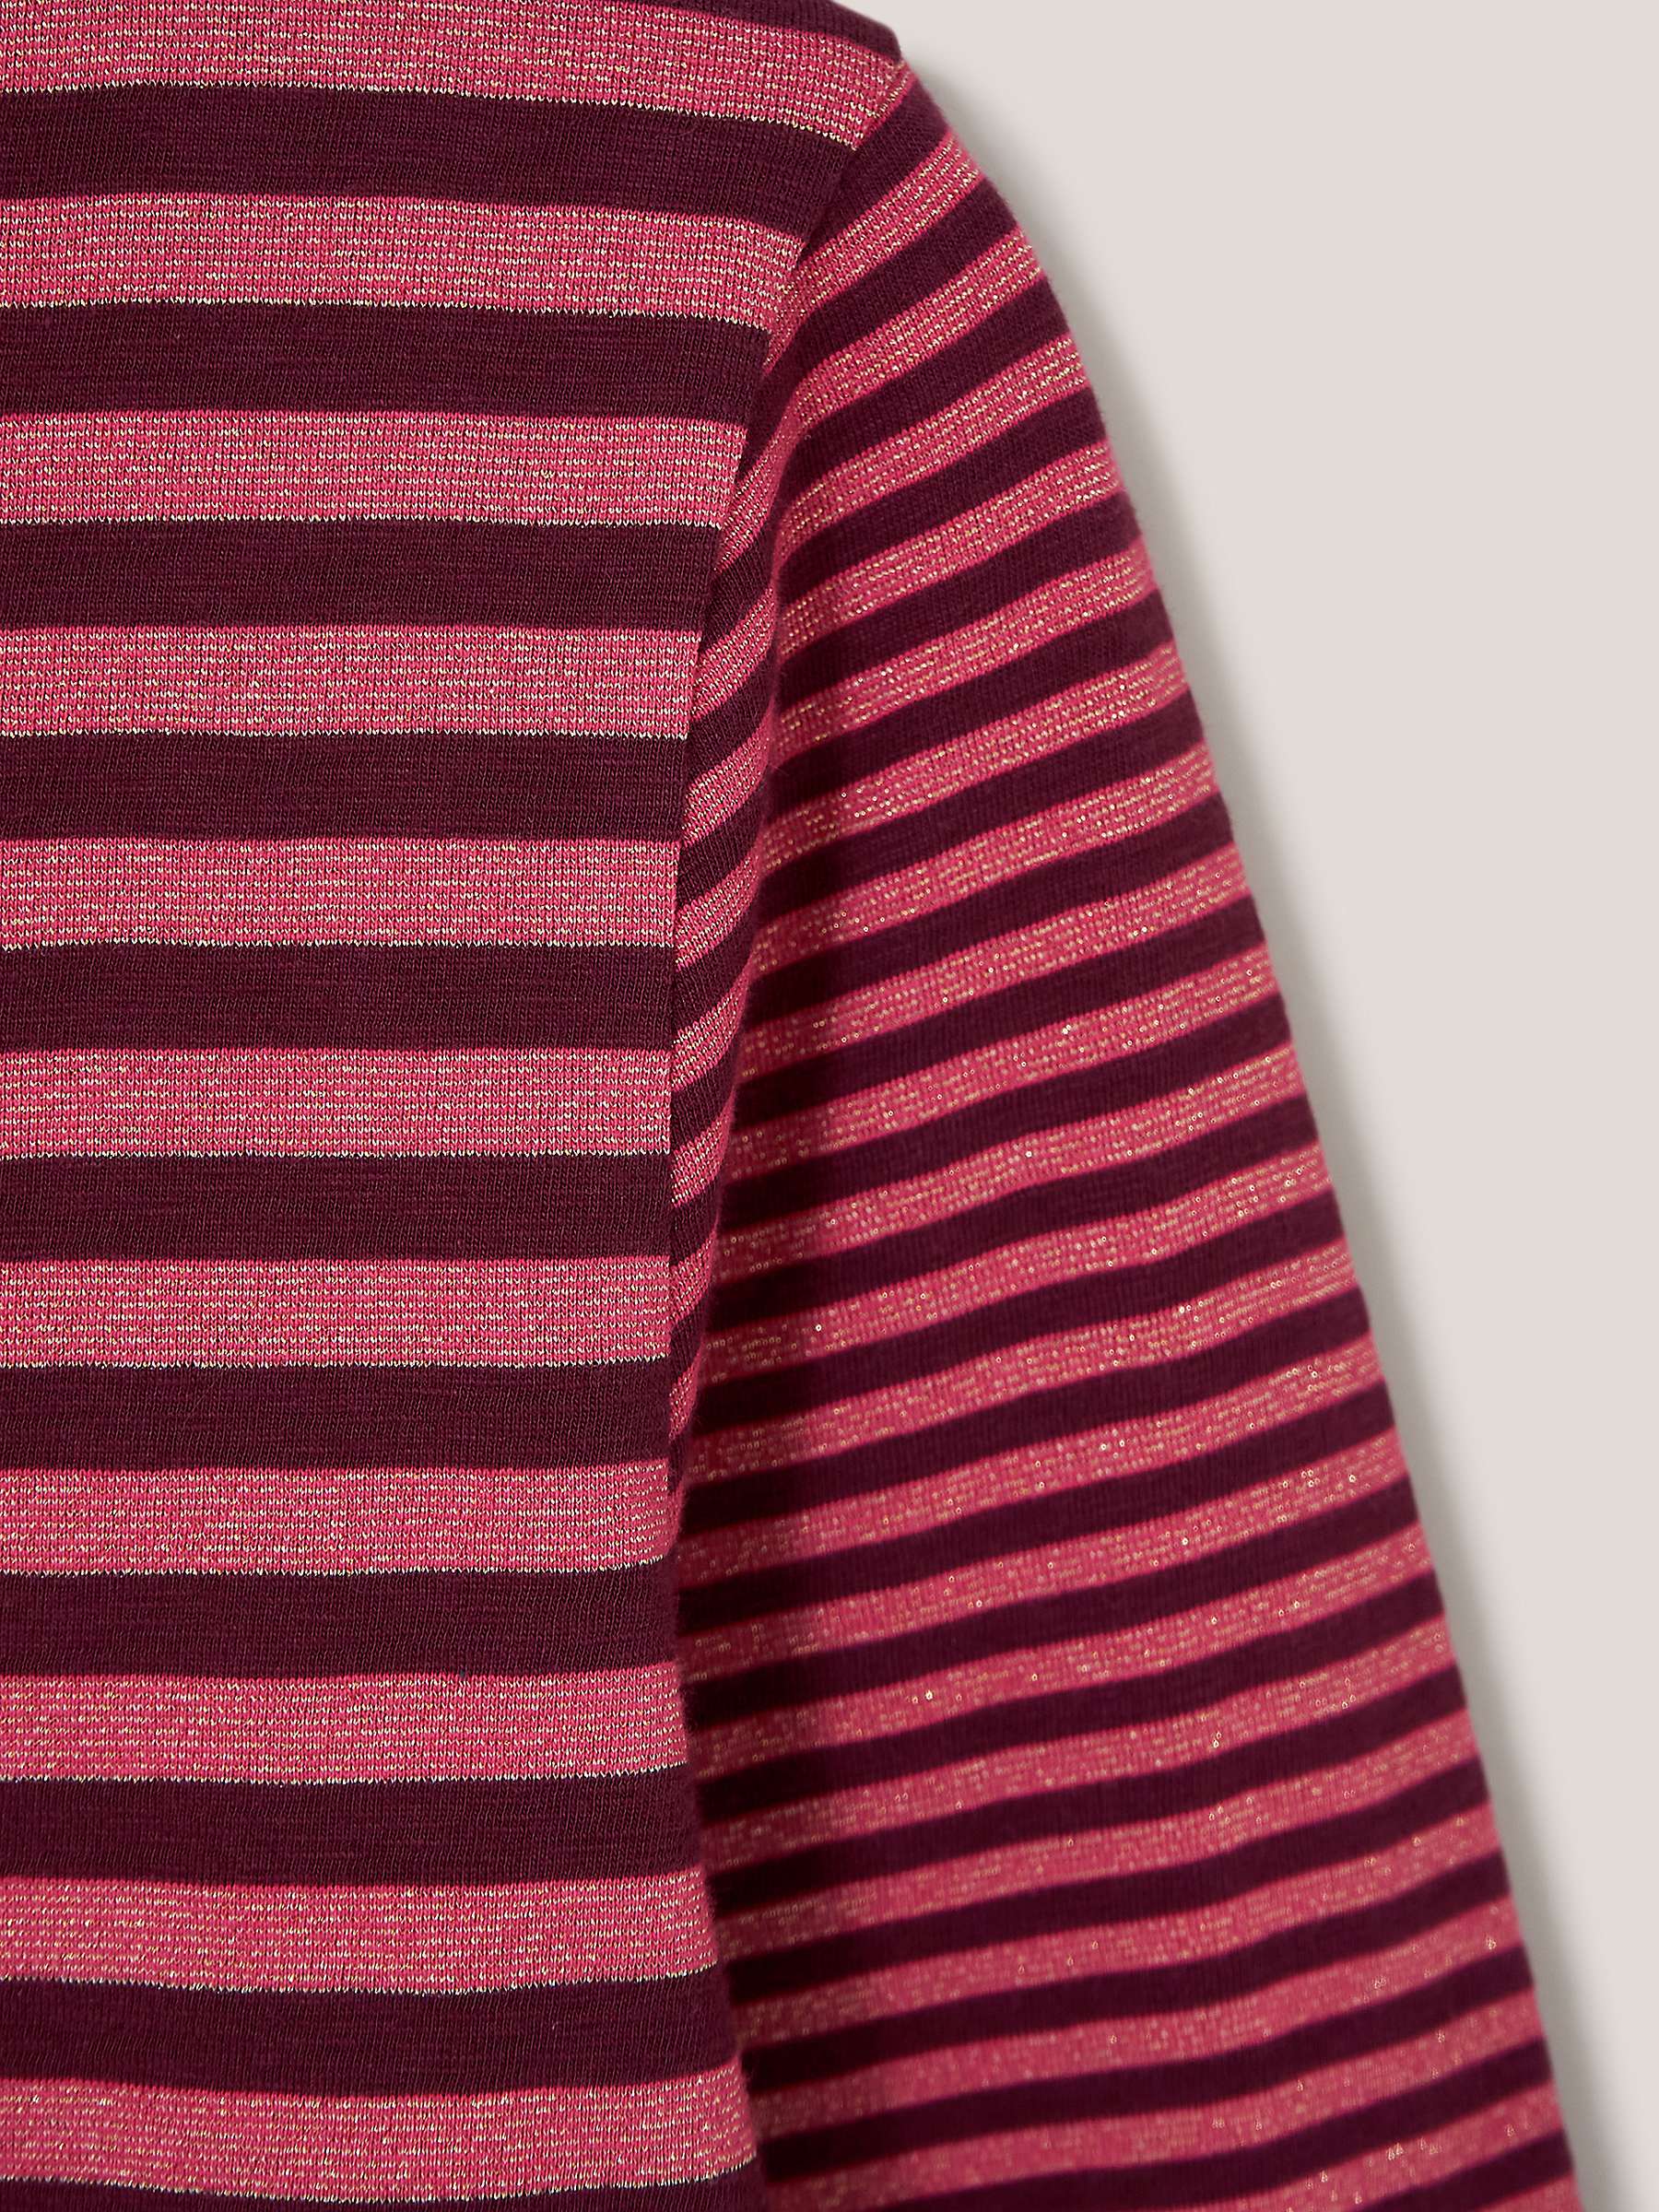 Buy White Stuff Cassie Sparkle Stripe Long Sleeve Top, Pink/Multi Online at johnlewis.com